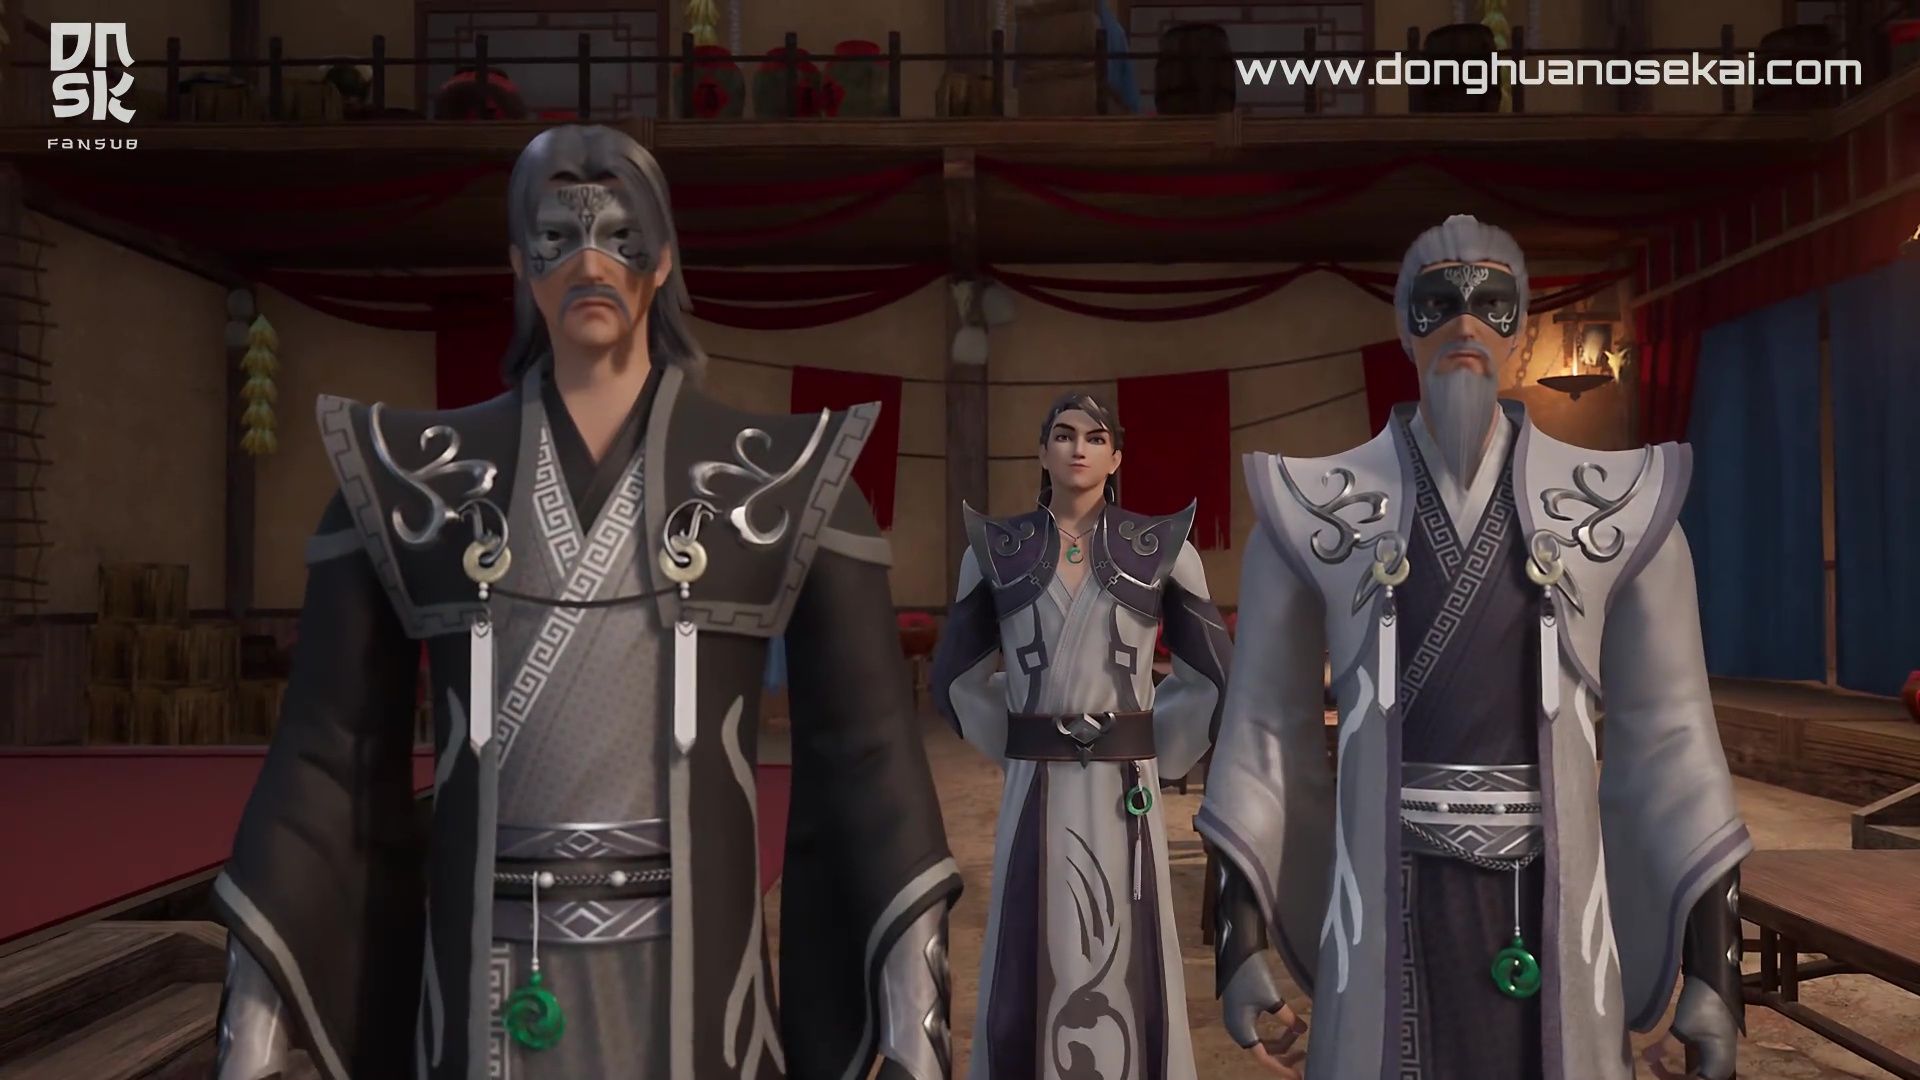 Assistir Wu Shang Shen Di - 2ª Temporada Online